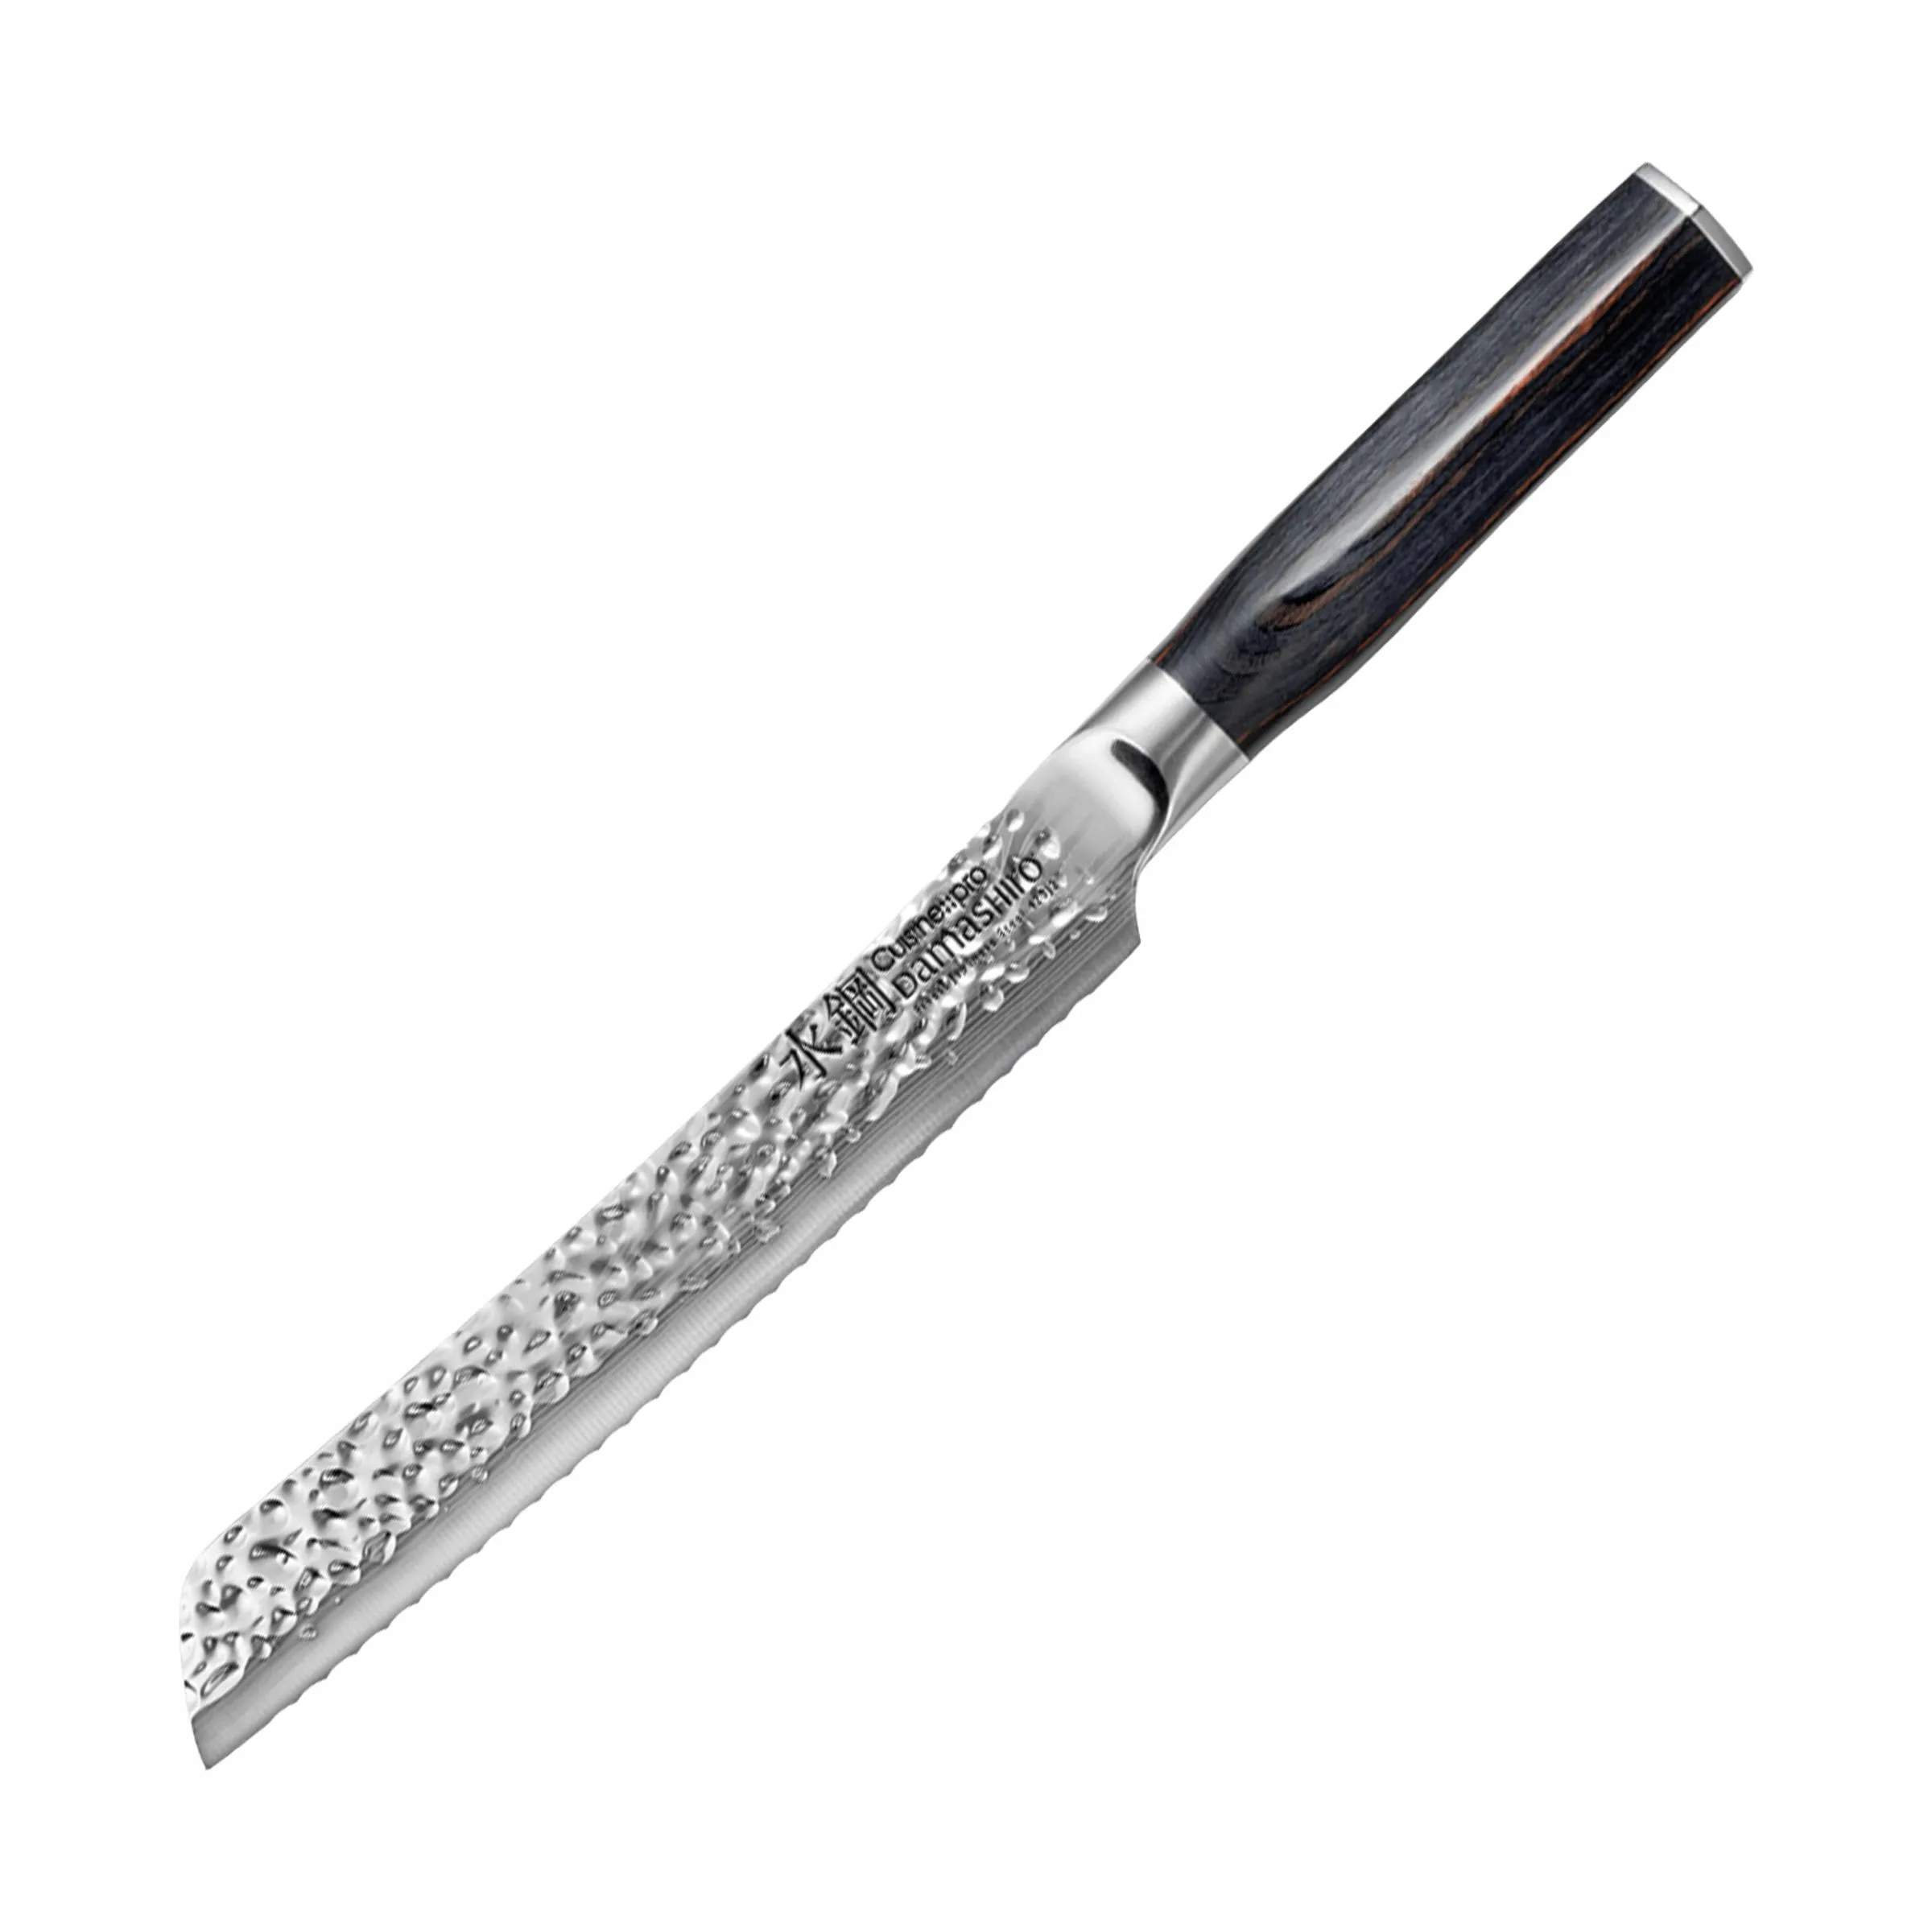 Damashiro® EMPEROR Brødkniv, sølv/brun, large